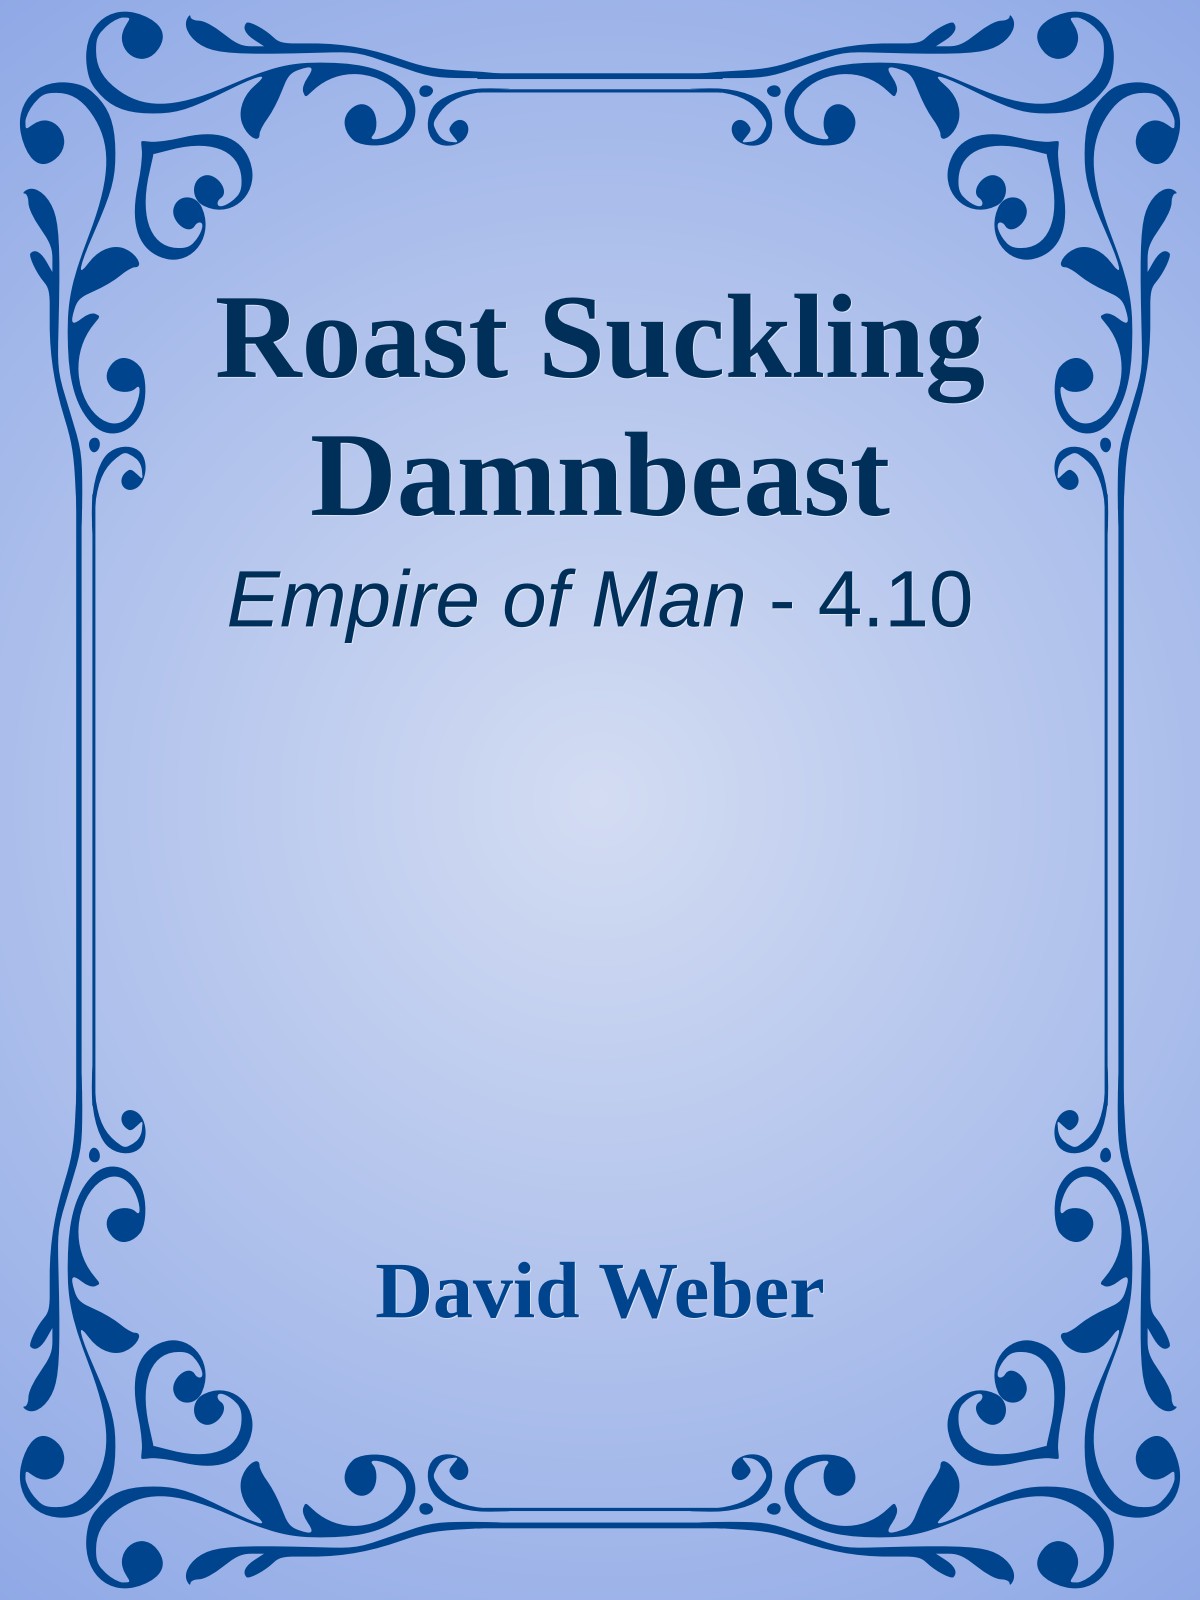 Roast Suckling Damnbeast